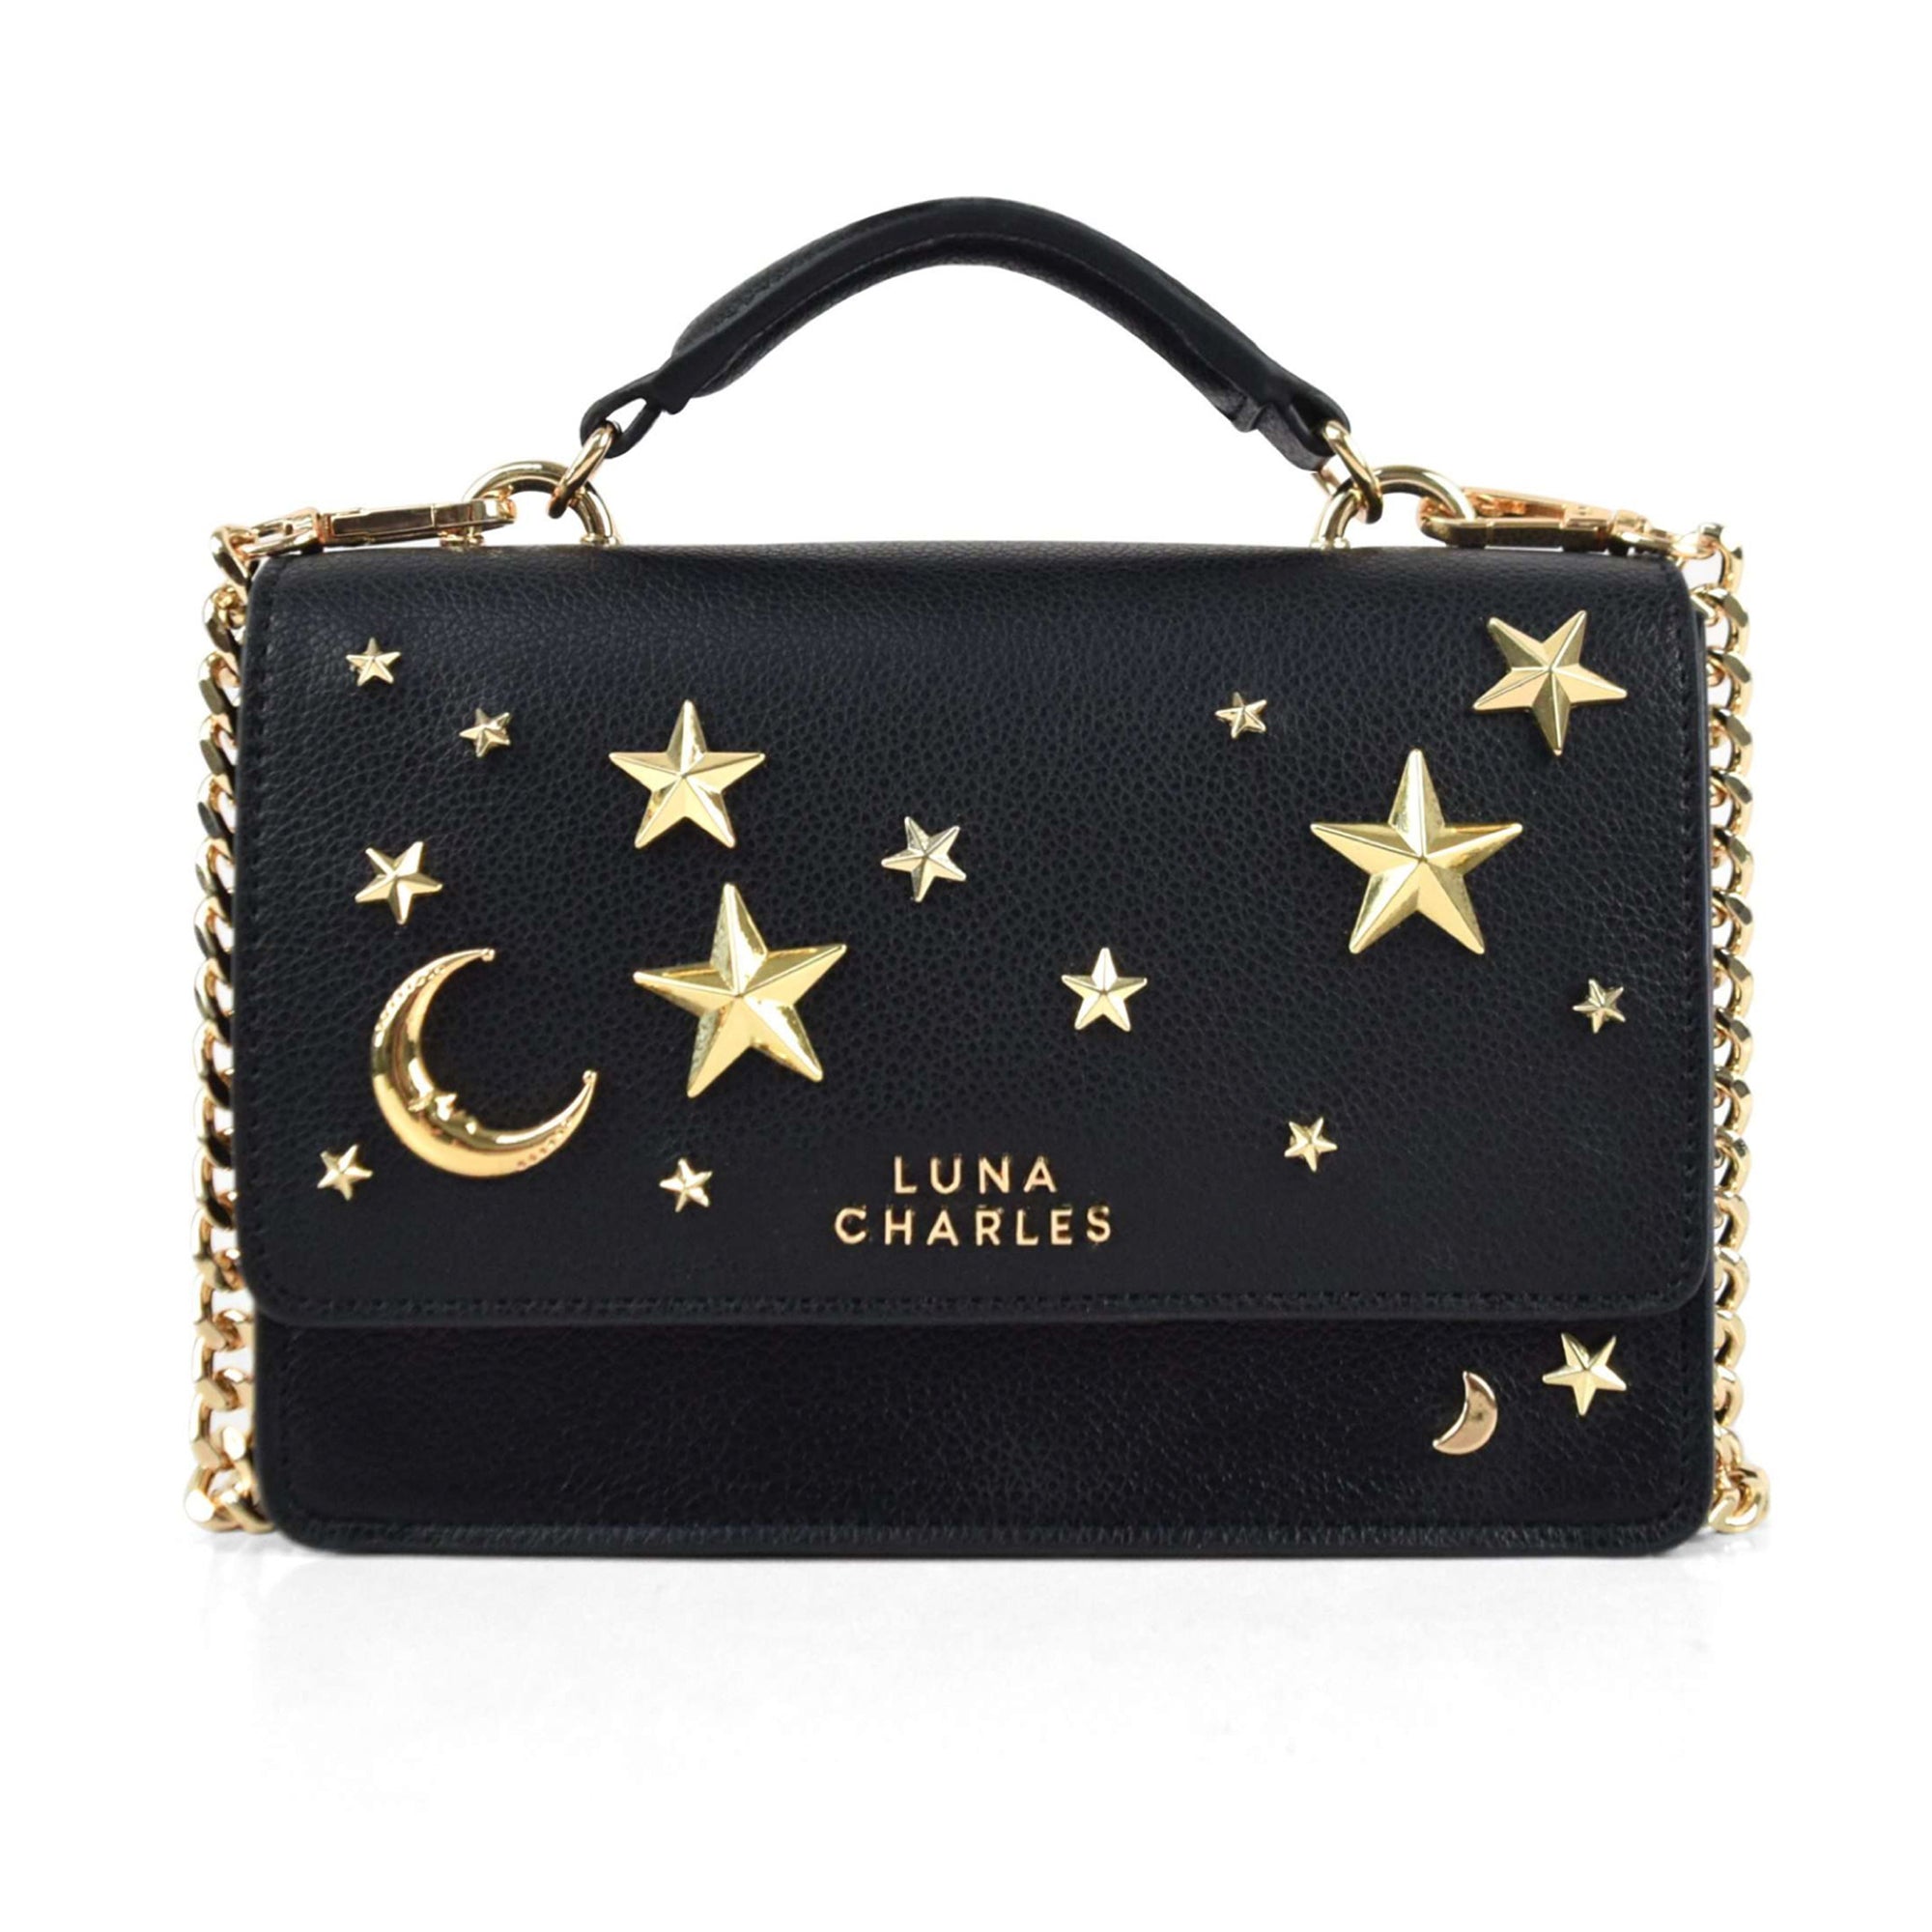 Moon pochette leather handbag